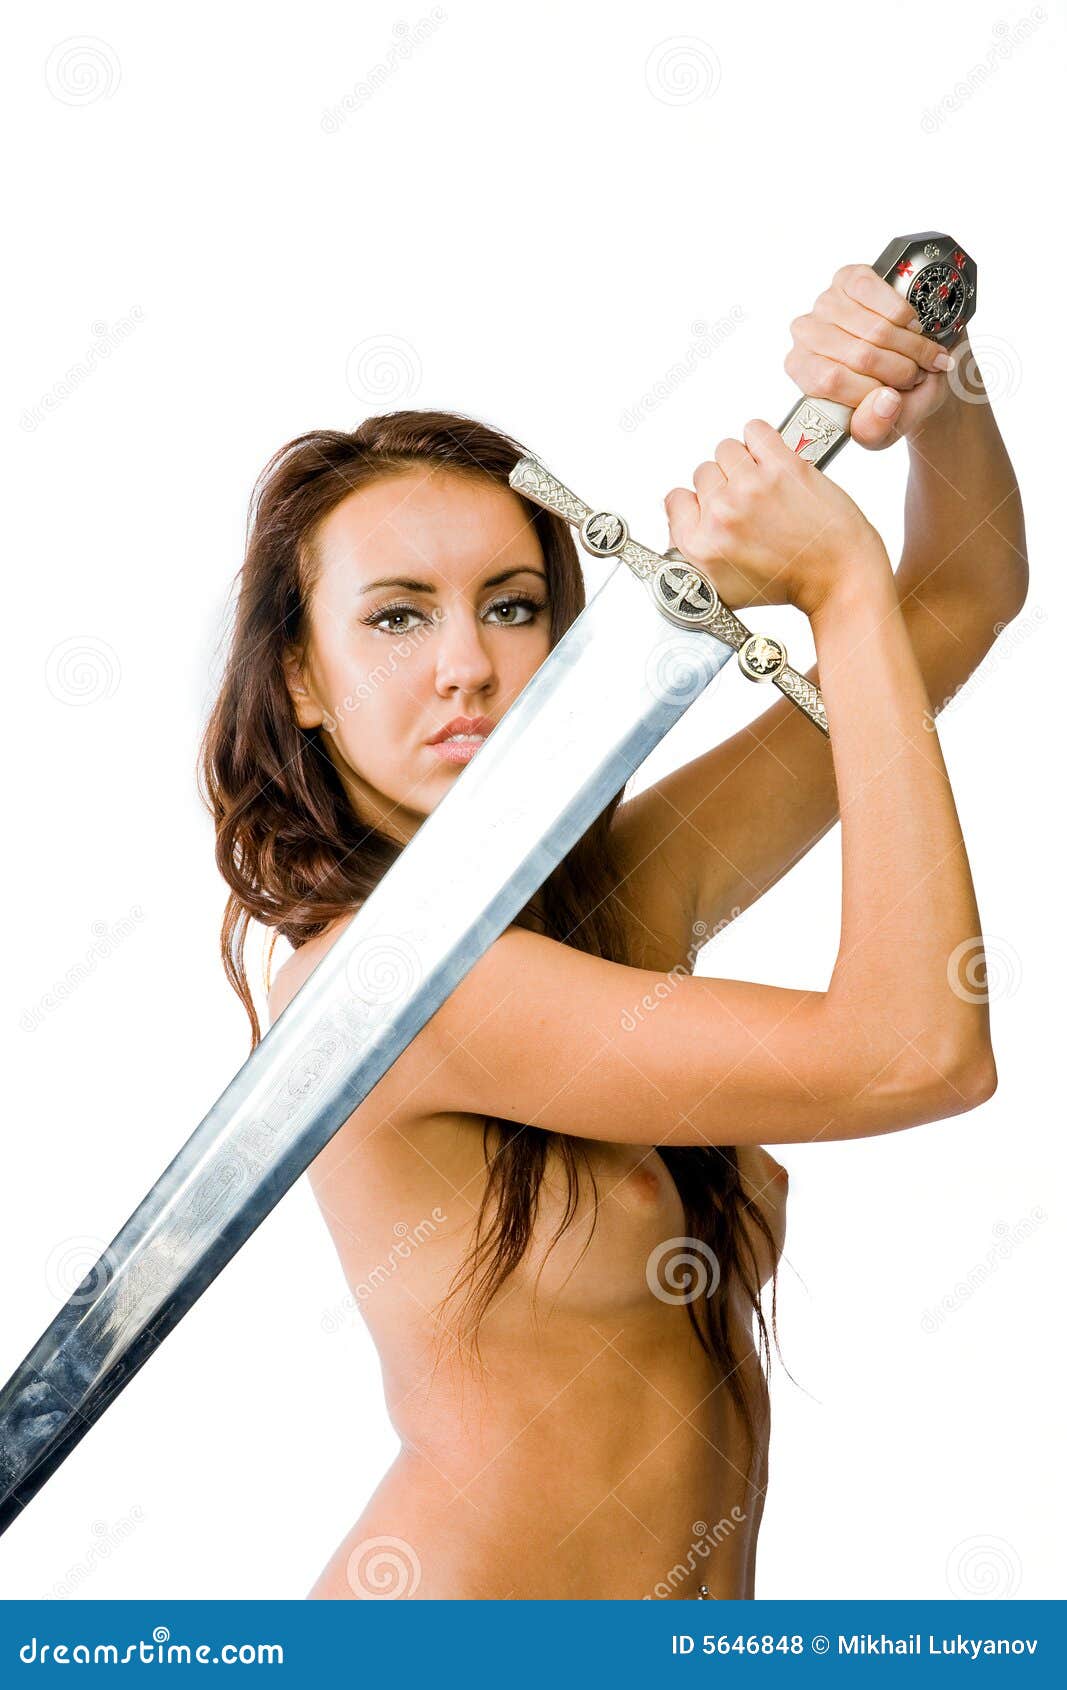 chethana kumar add nude girls with swords photo